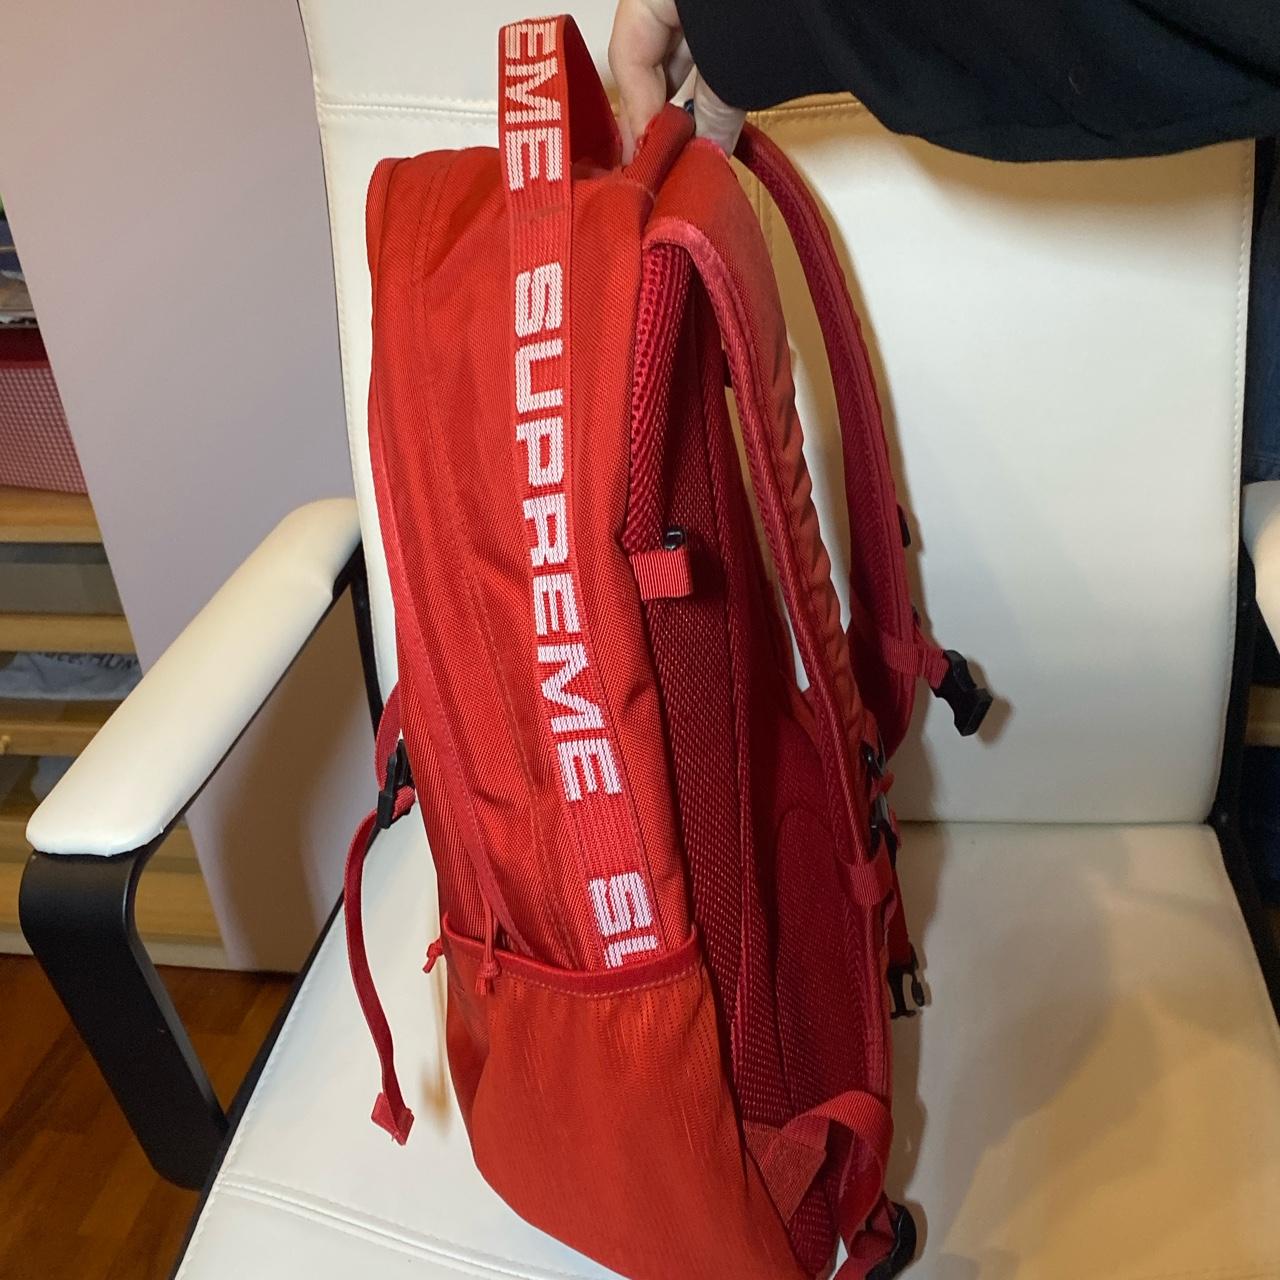 Fake Supreme Backpacks for Sale